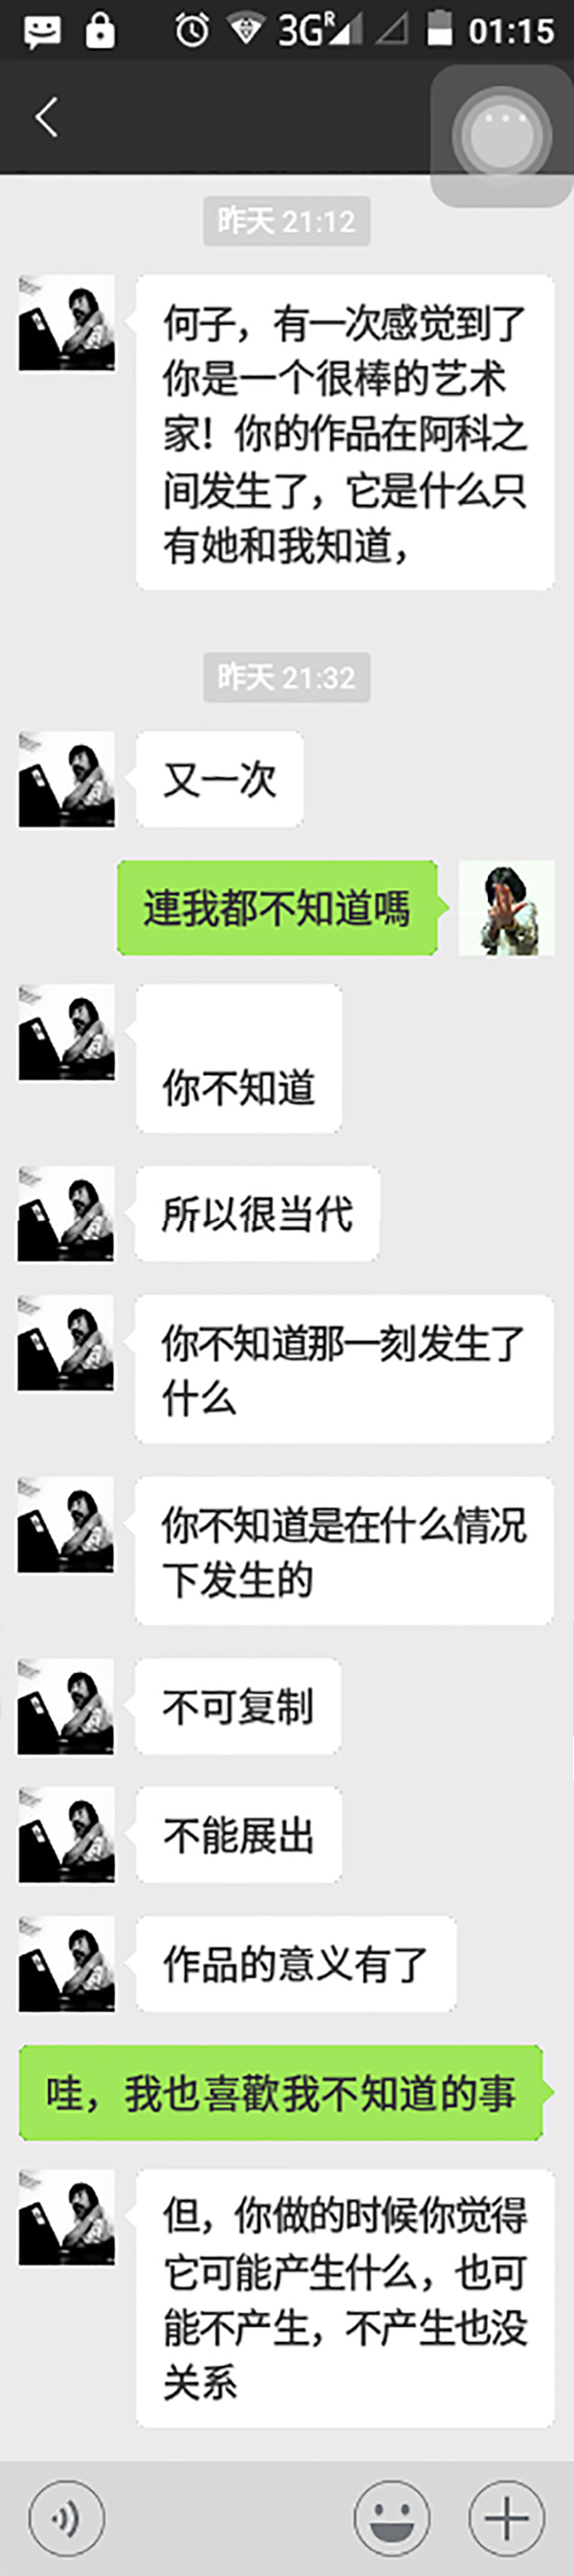 WeChat conversation between artist and Twist QU